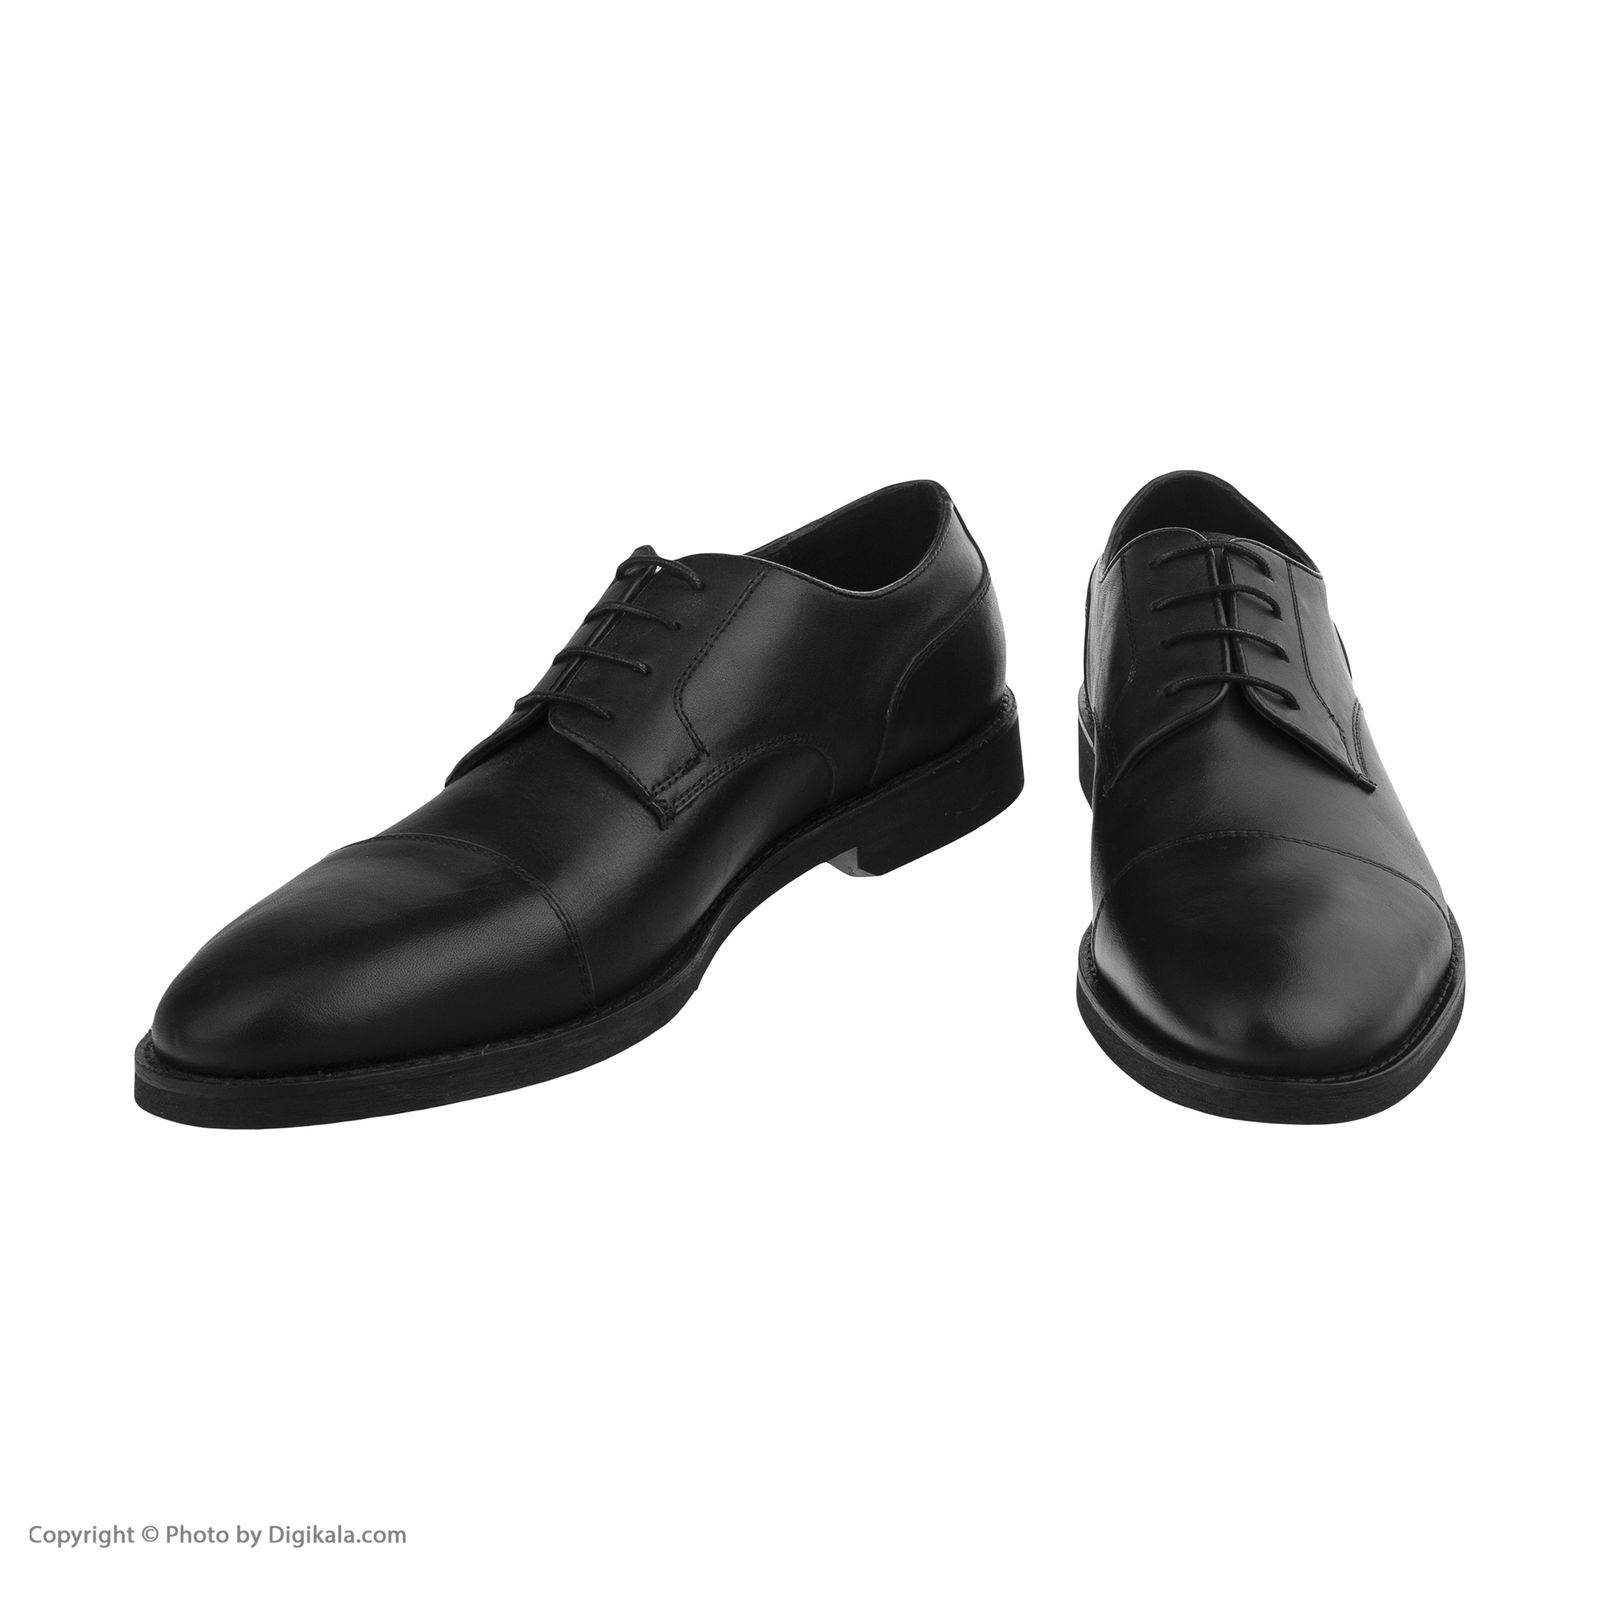  کفش مردانه شیفر مدل 7253E503101 -  - 5